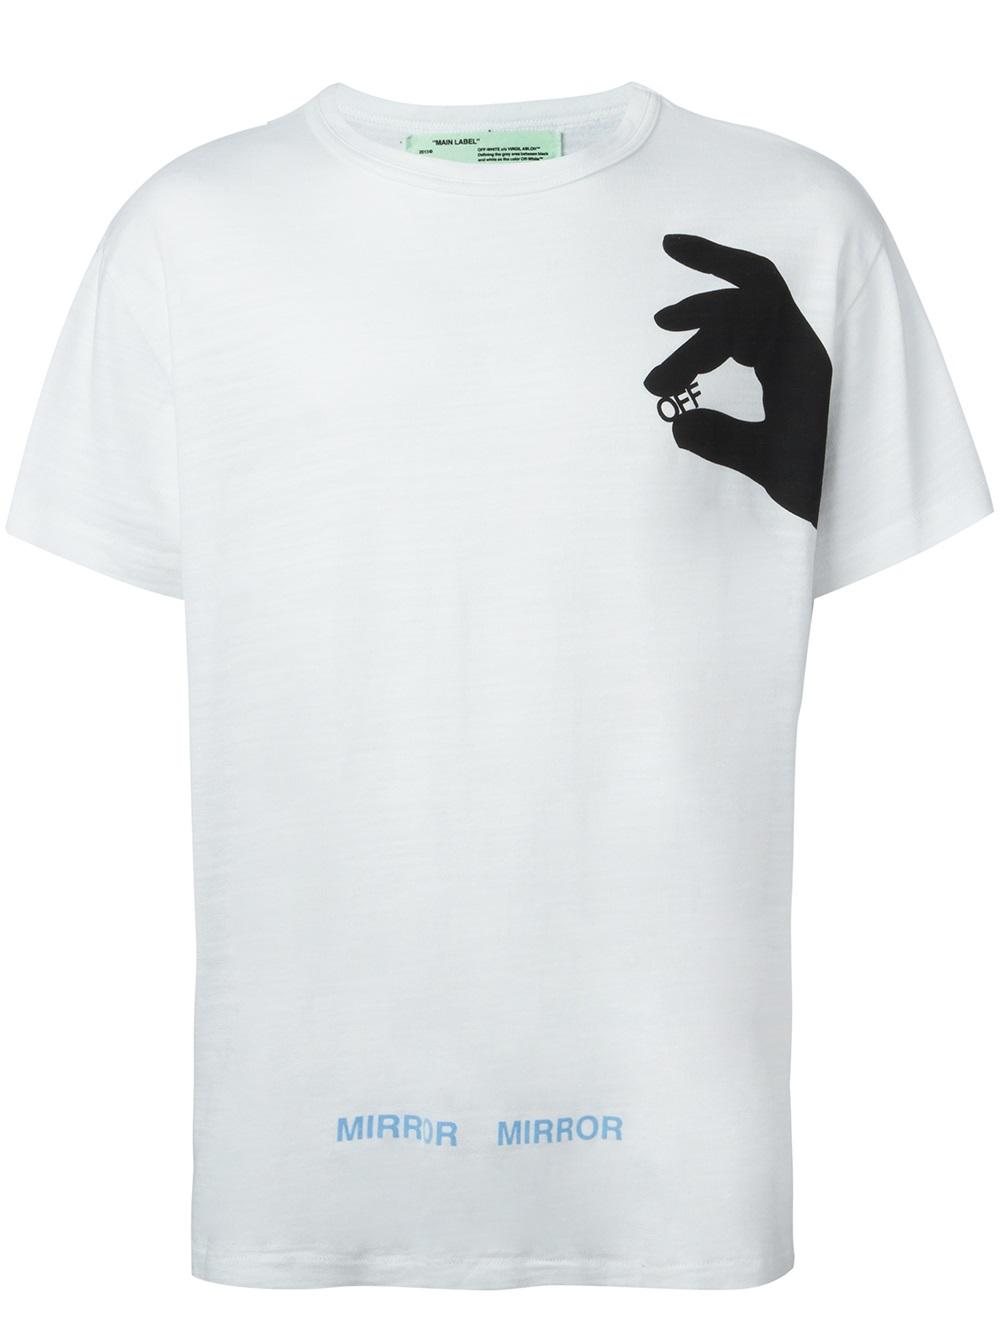 Off-White Hand Off T-shirt WHITE Men Clothing T-Shirts